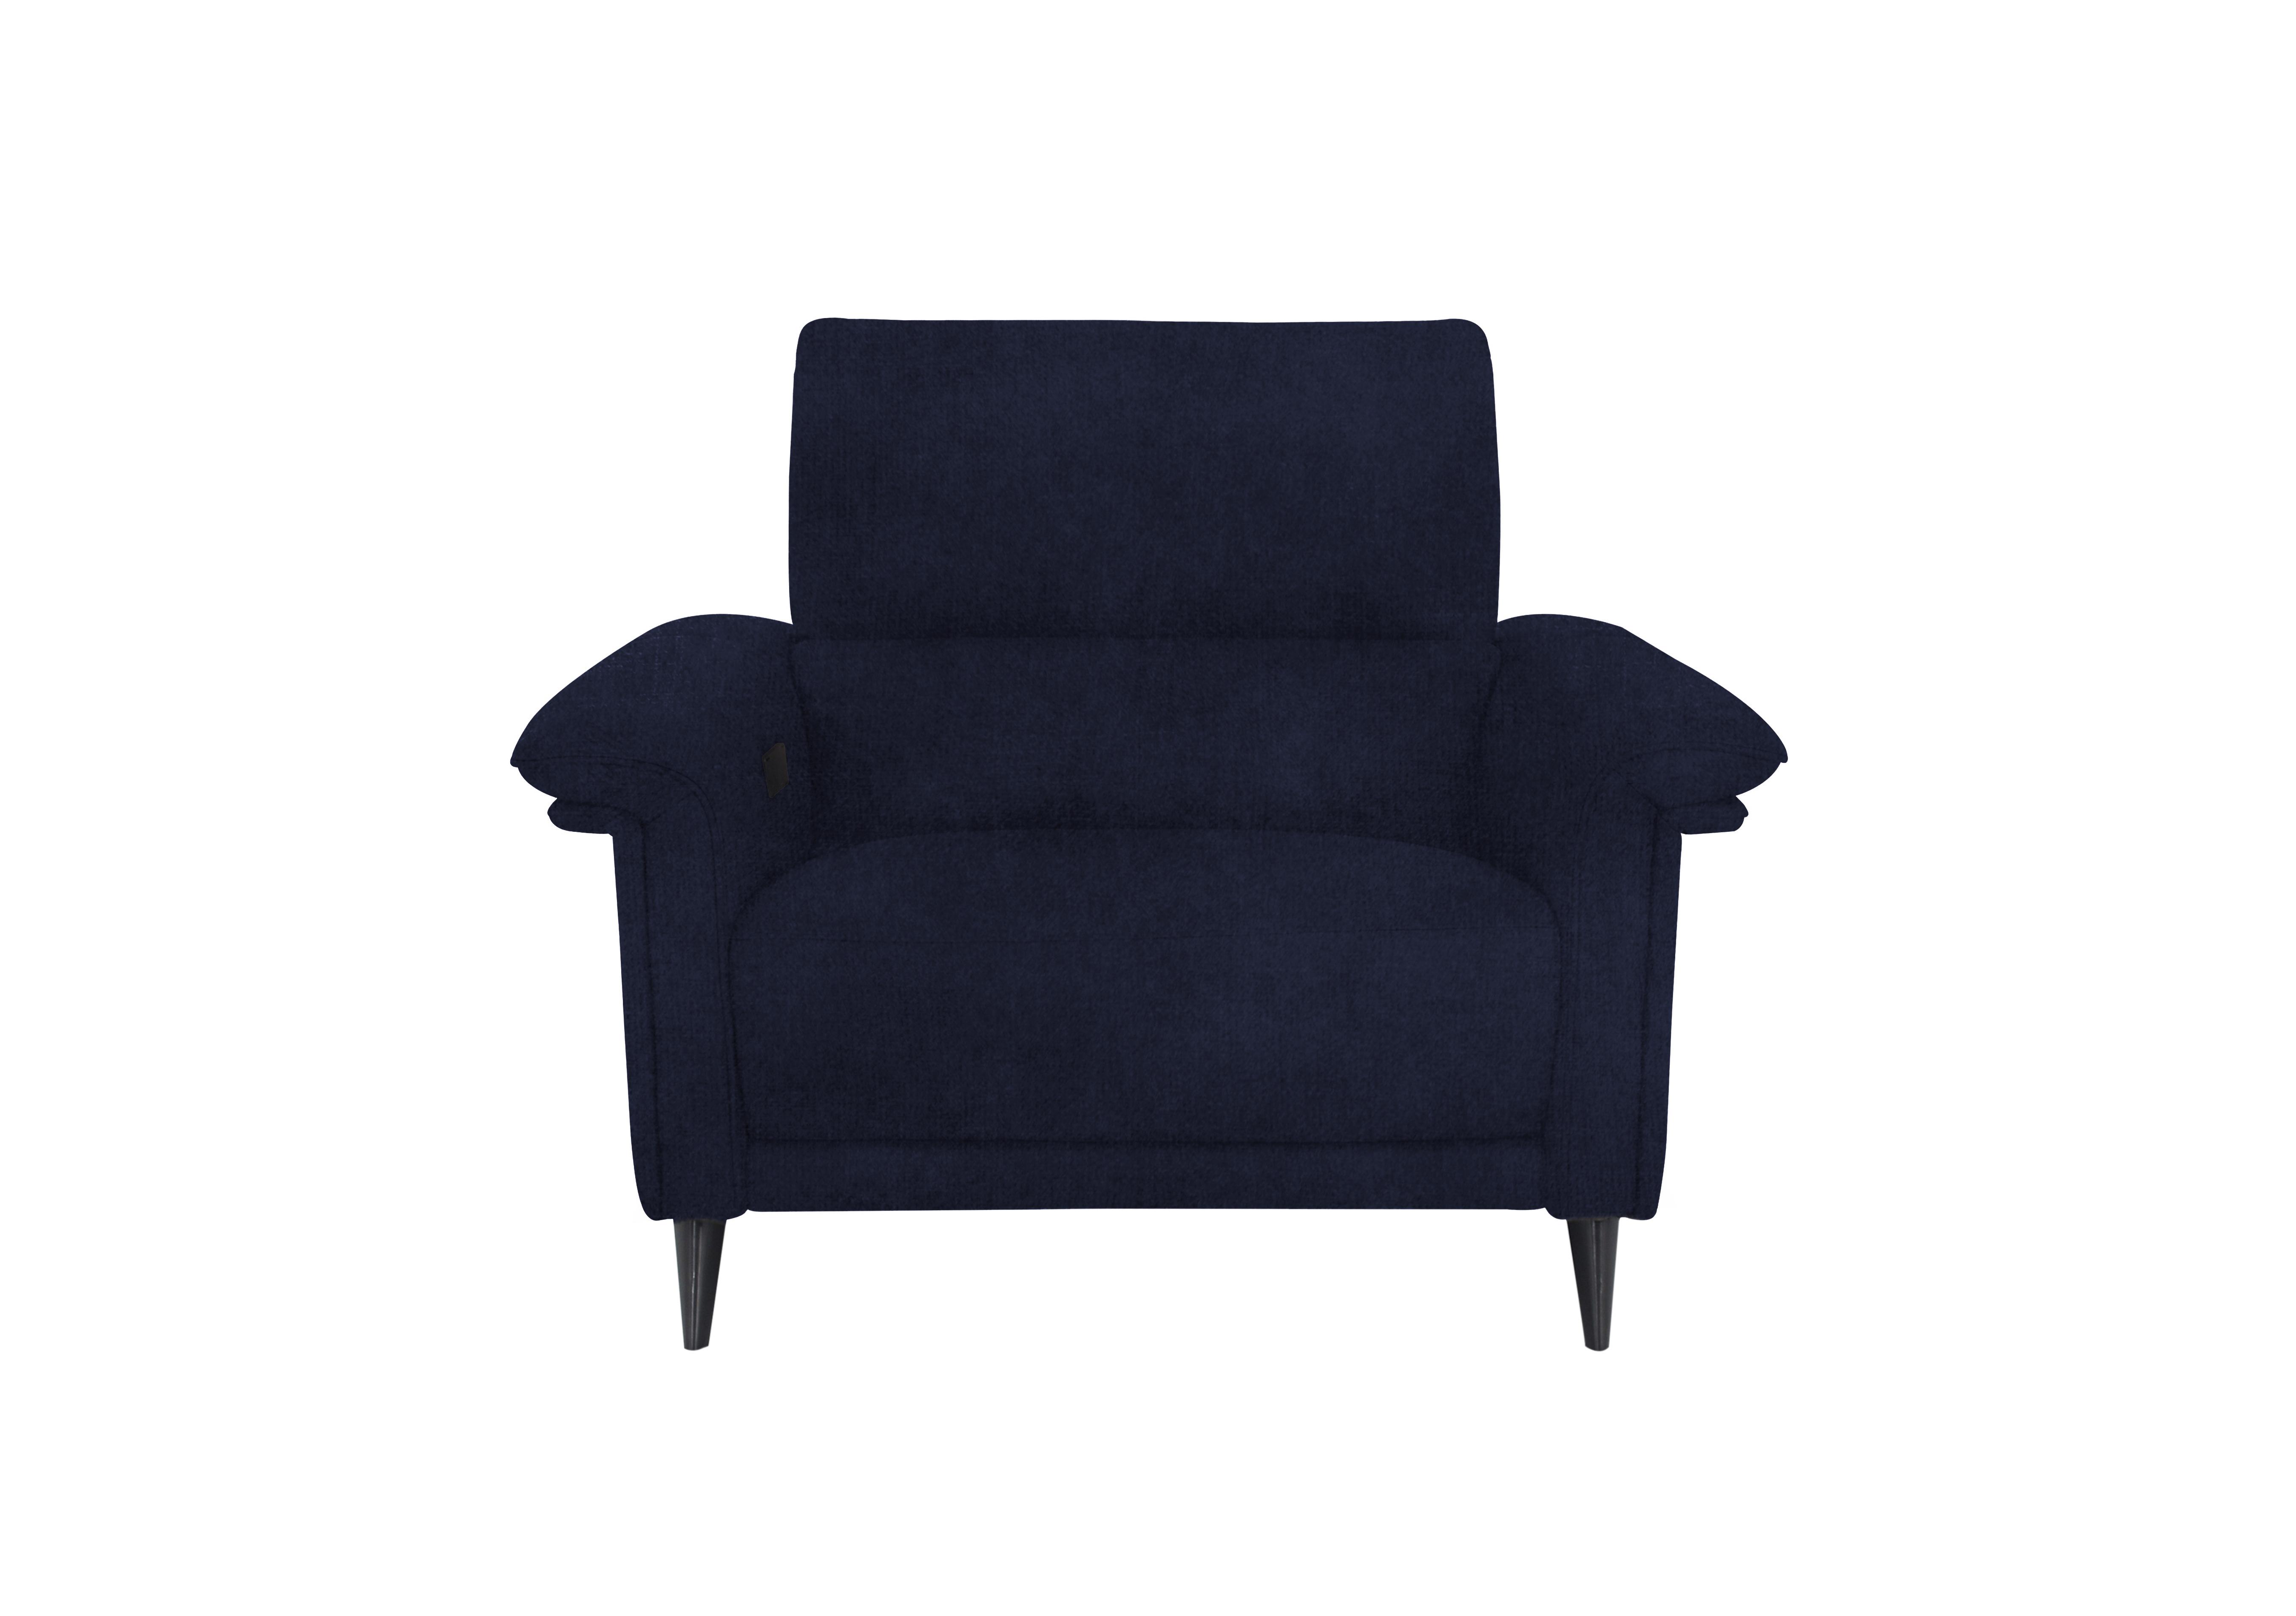 Huxley Fabric Chair in Fab-Meg-R28 Navy on Furniture Village